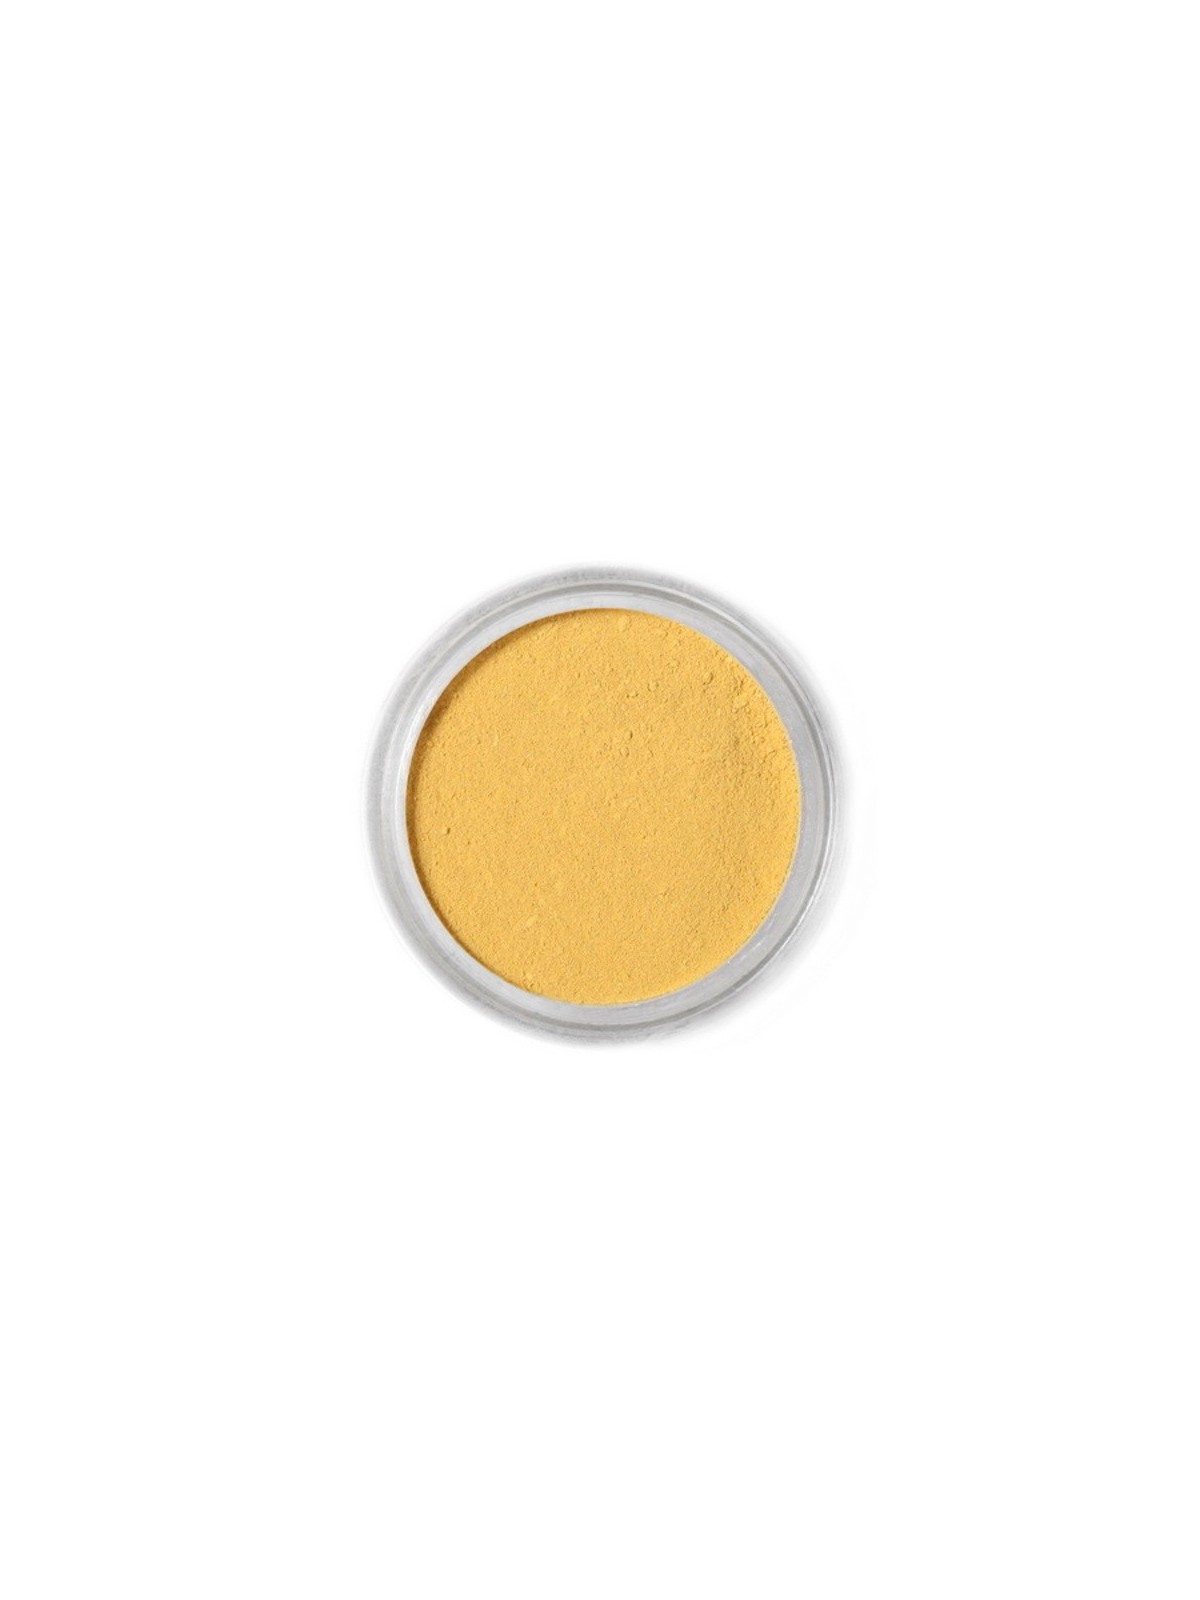 Jedlá prachová farba Fractal - Mustard Yellow, Mustarsárga (2 g)